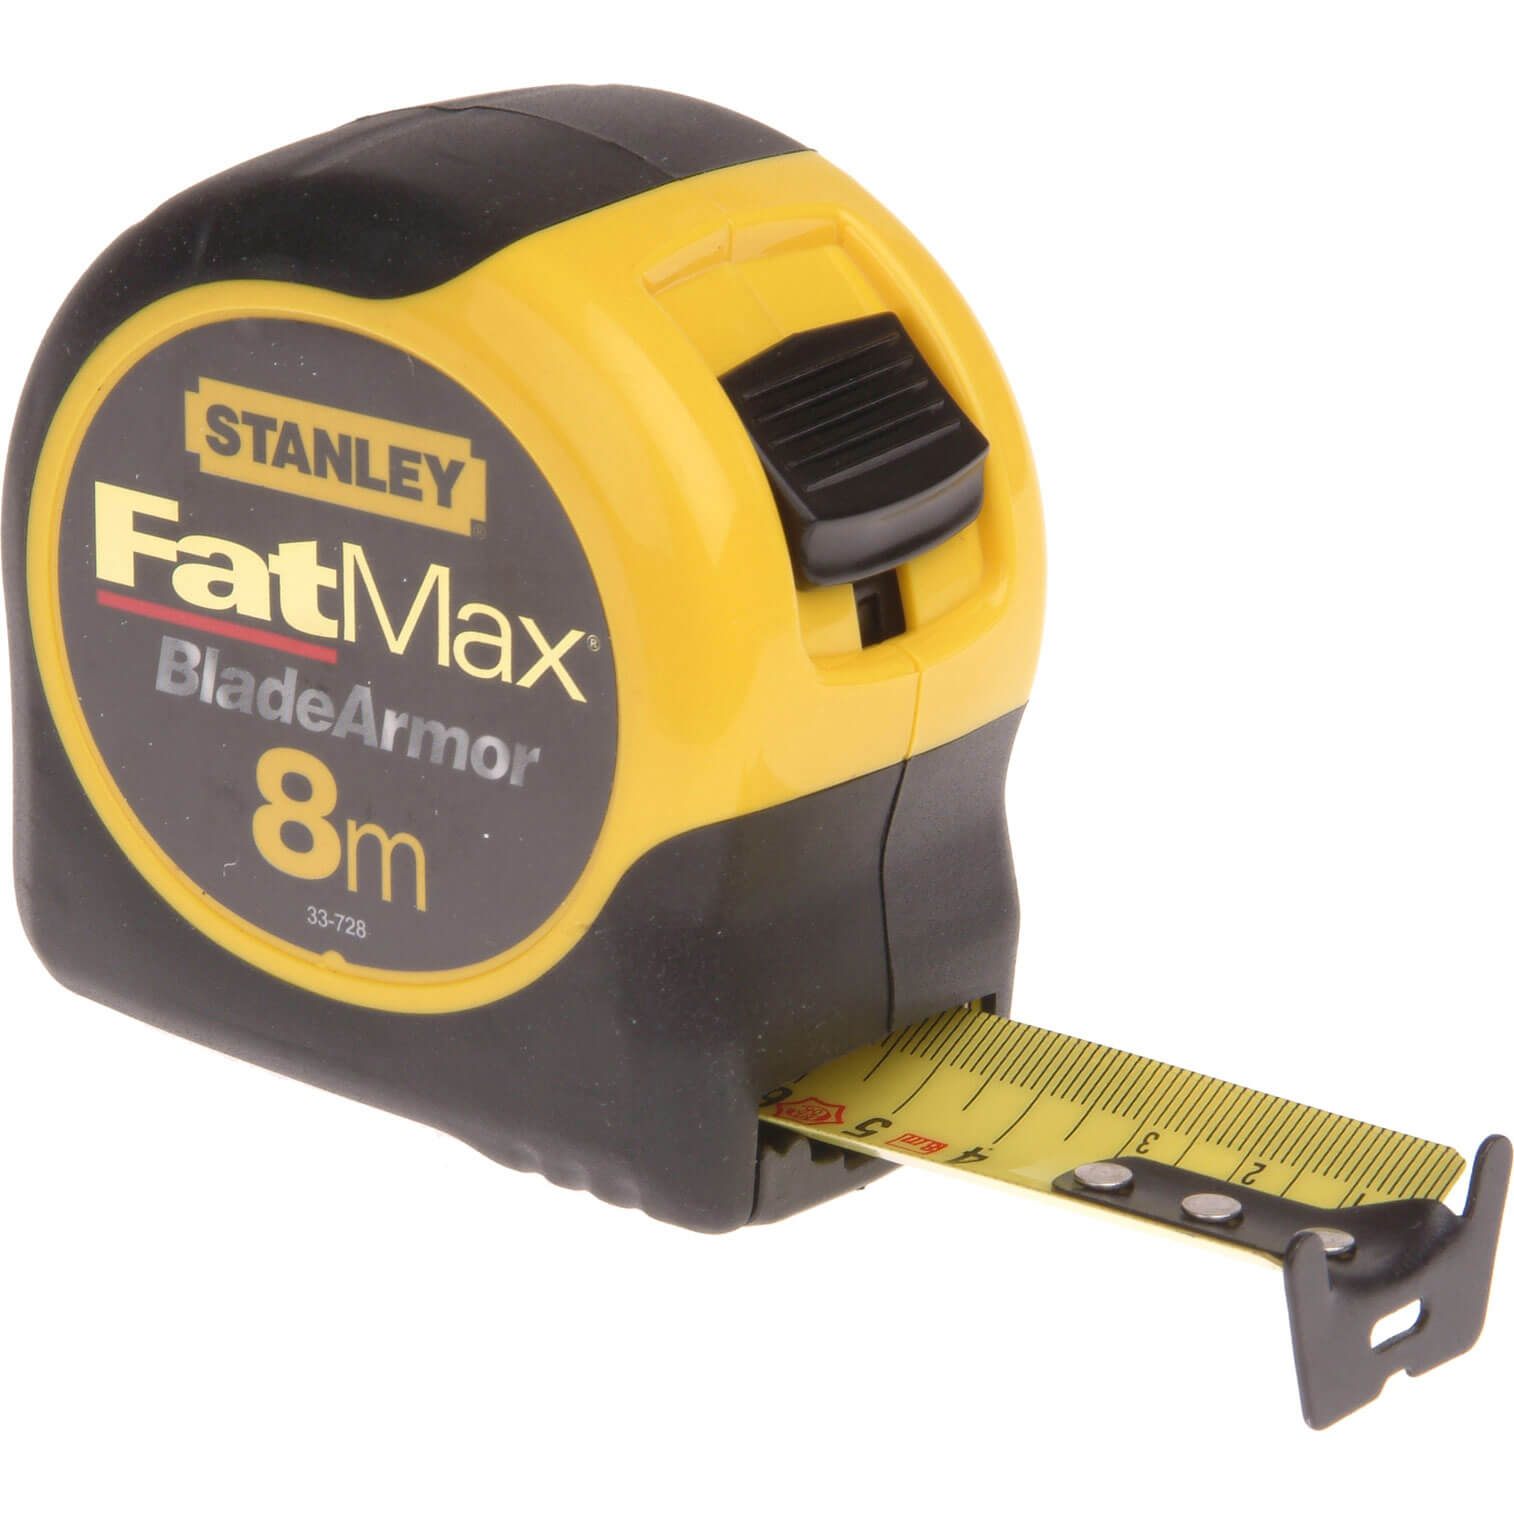 Photo of Stanley Fatmax Blade Armor Tape Measure Metric 8m 32mm